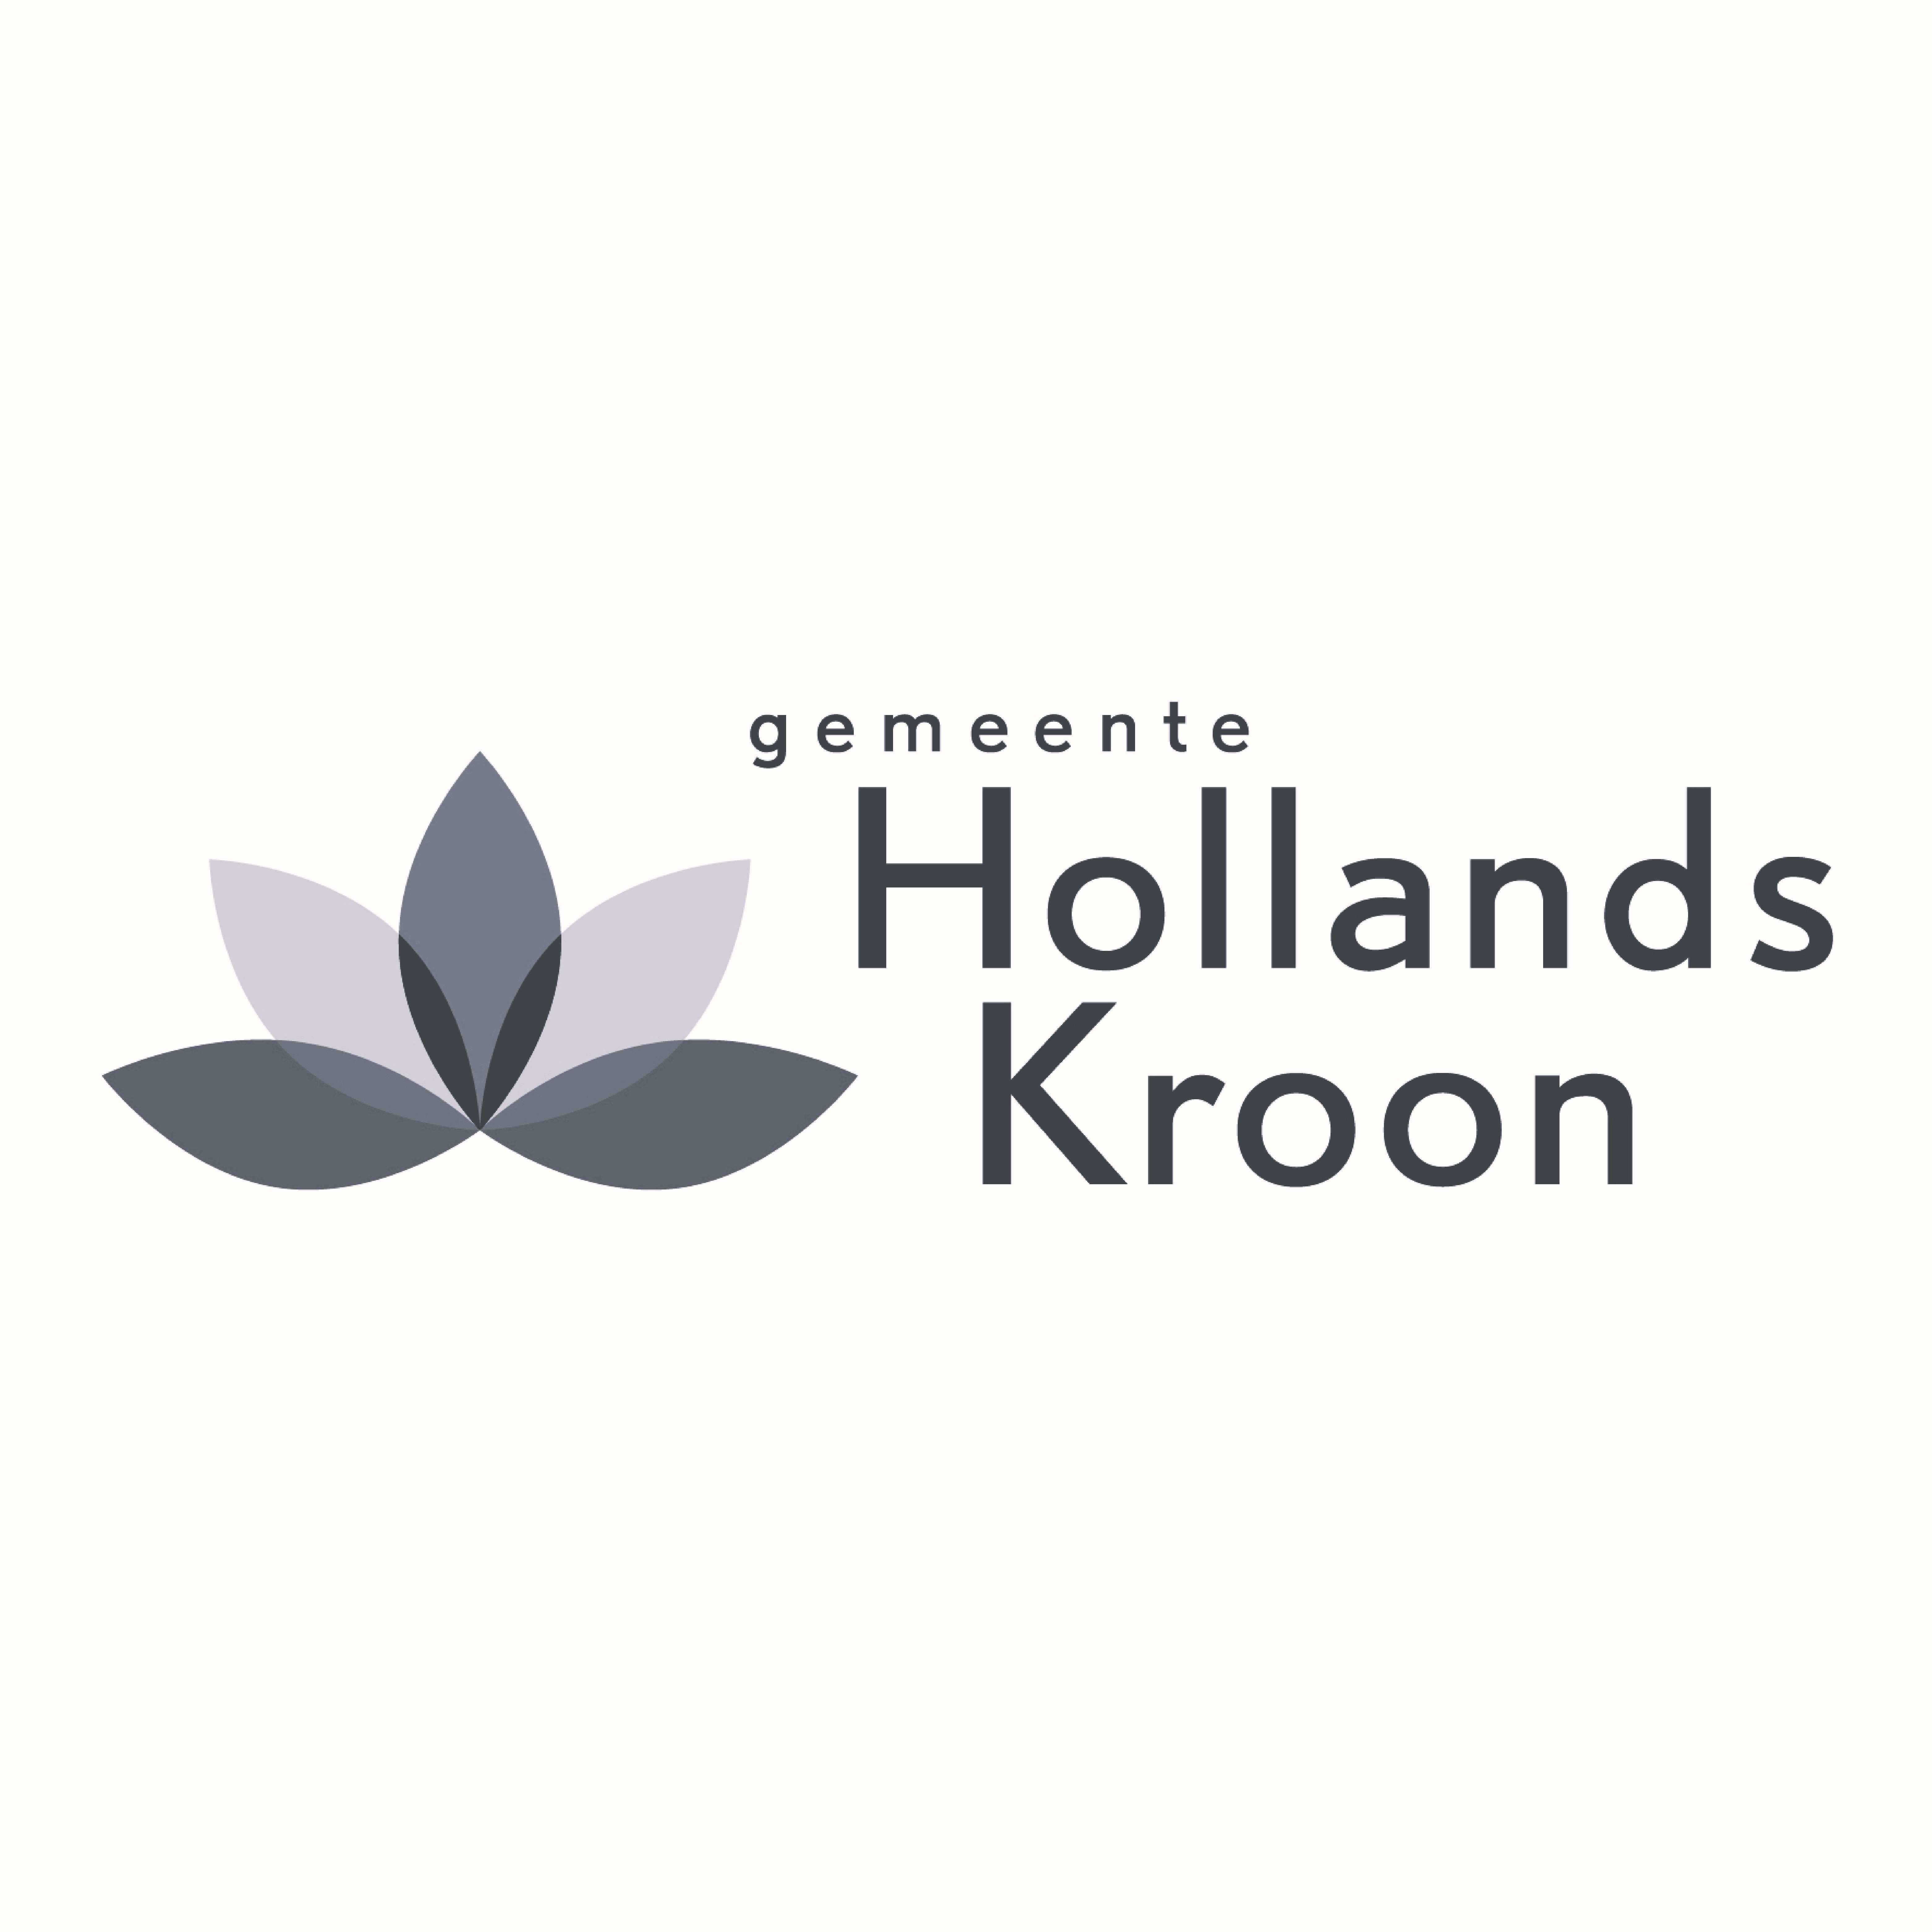 Gemeente Hollands Kroon (zwart-wit)